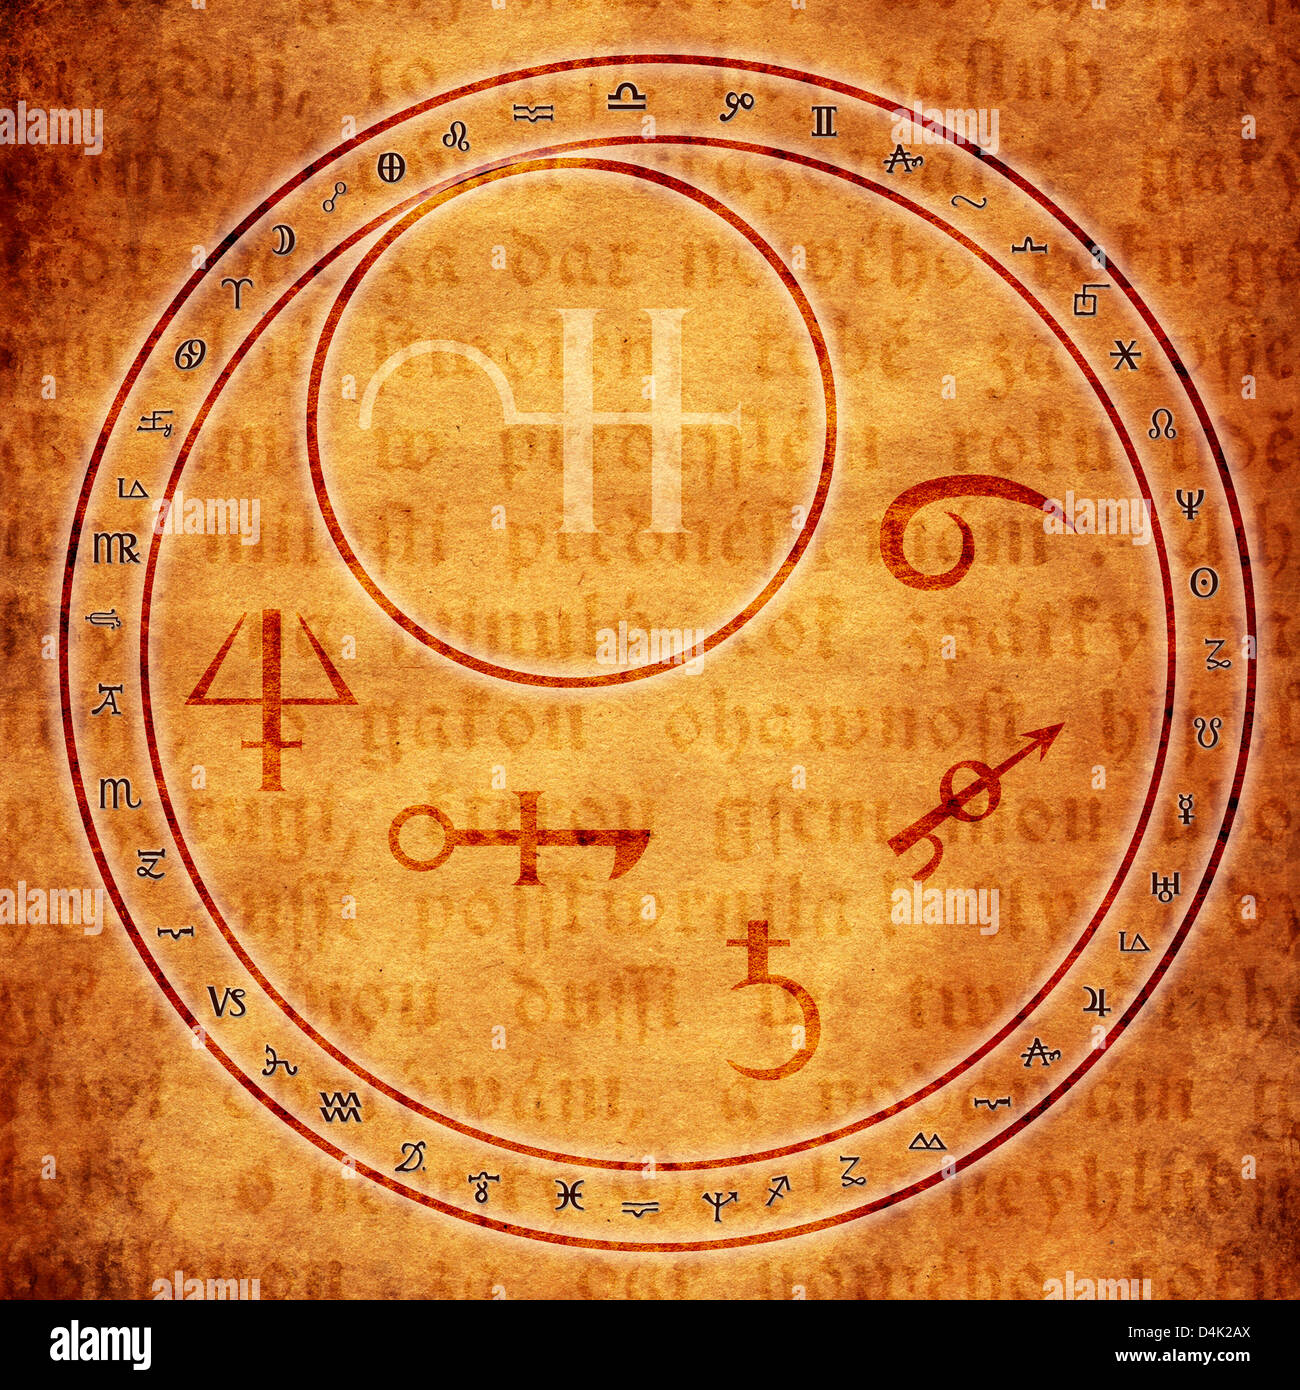 Astrologie und Alchemie Symbole Stockfoto